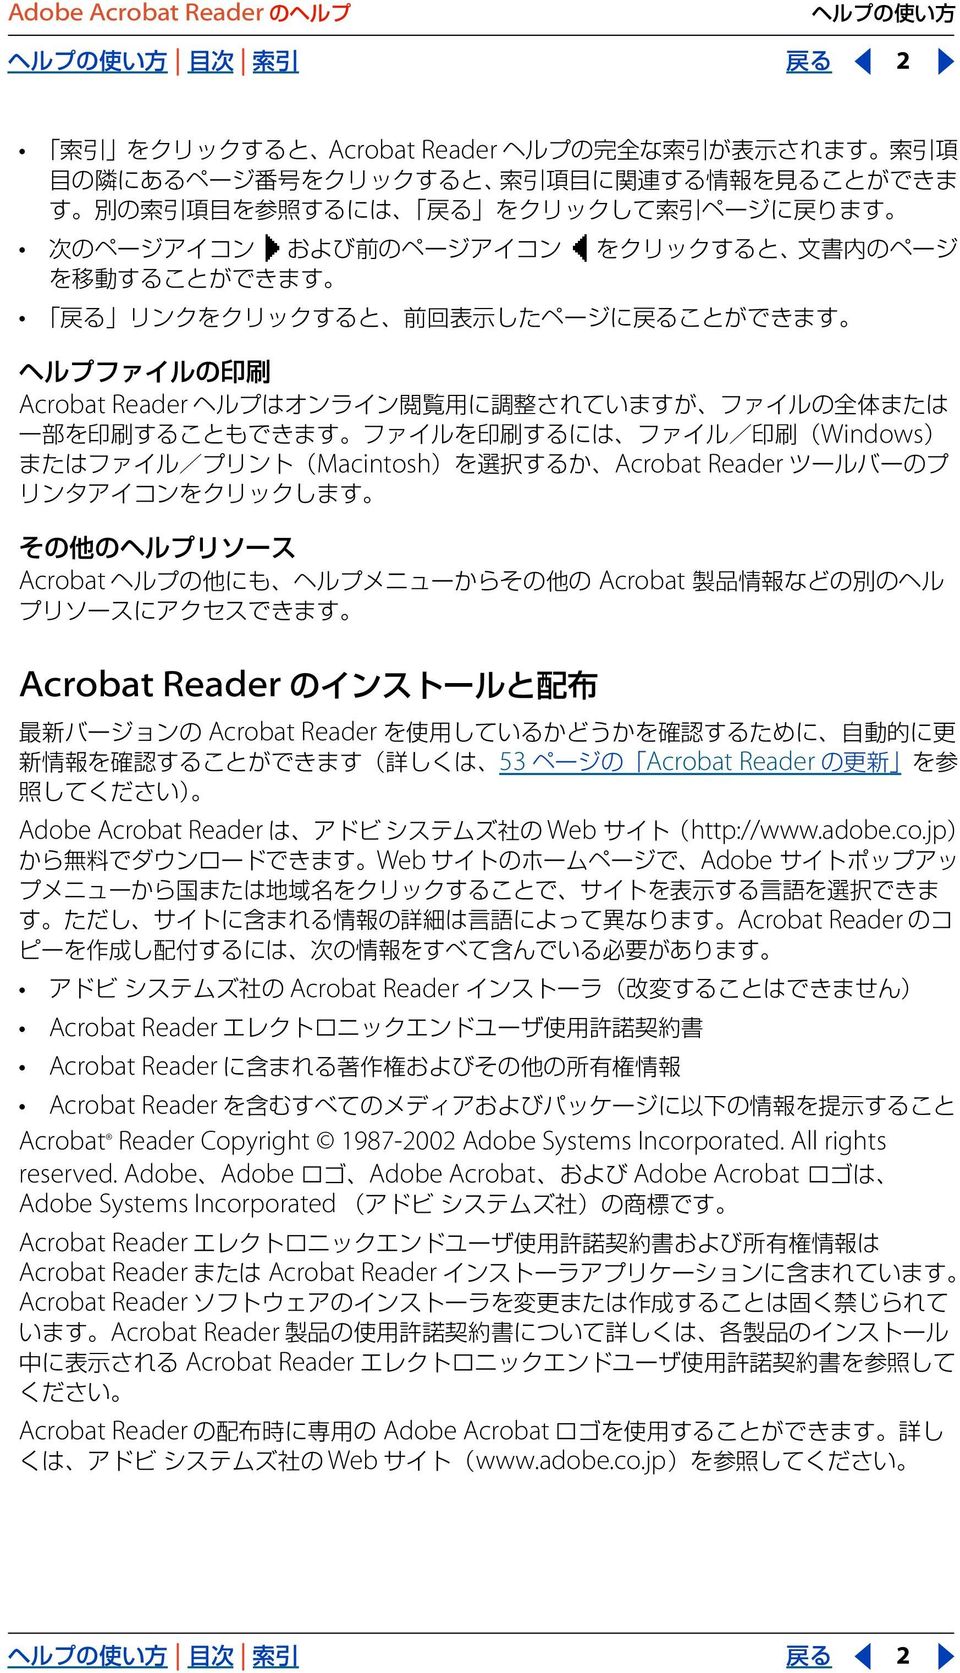 jp Web Adobe Acrobat Reader Acrobat Reader Acrobat Reader Acrobat Reader Acrobat Reader Acrobat Reader Copyright 1987-2002 Adobe Systems